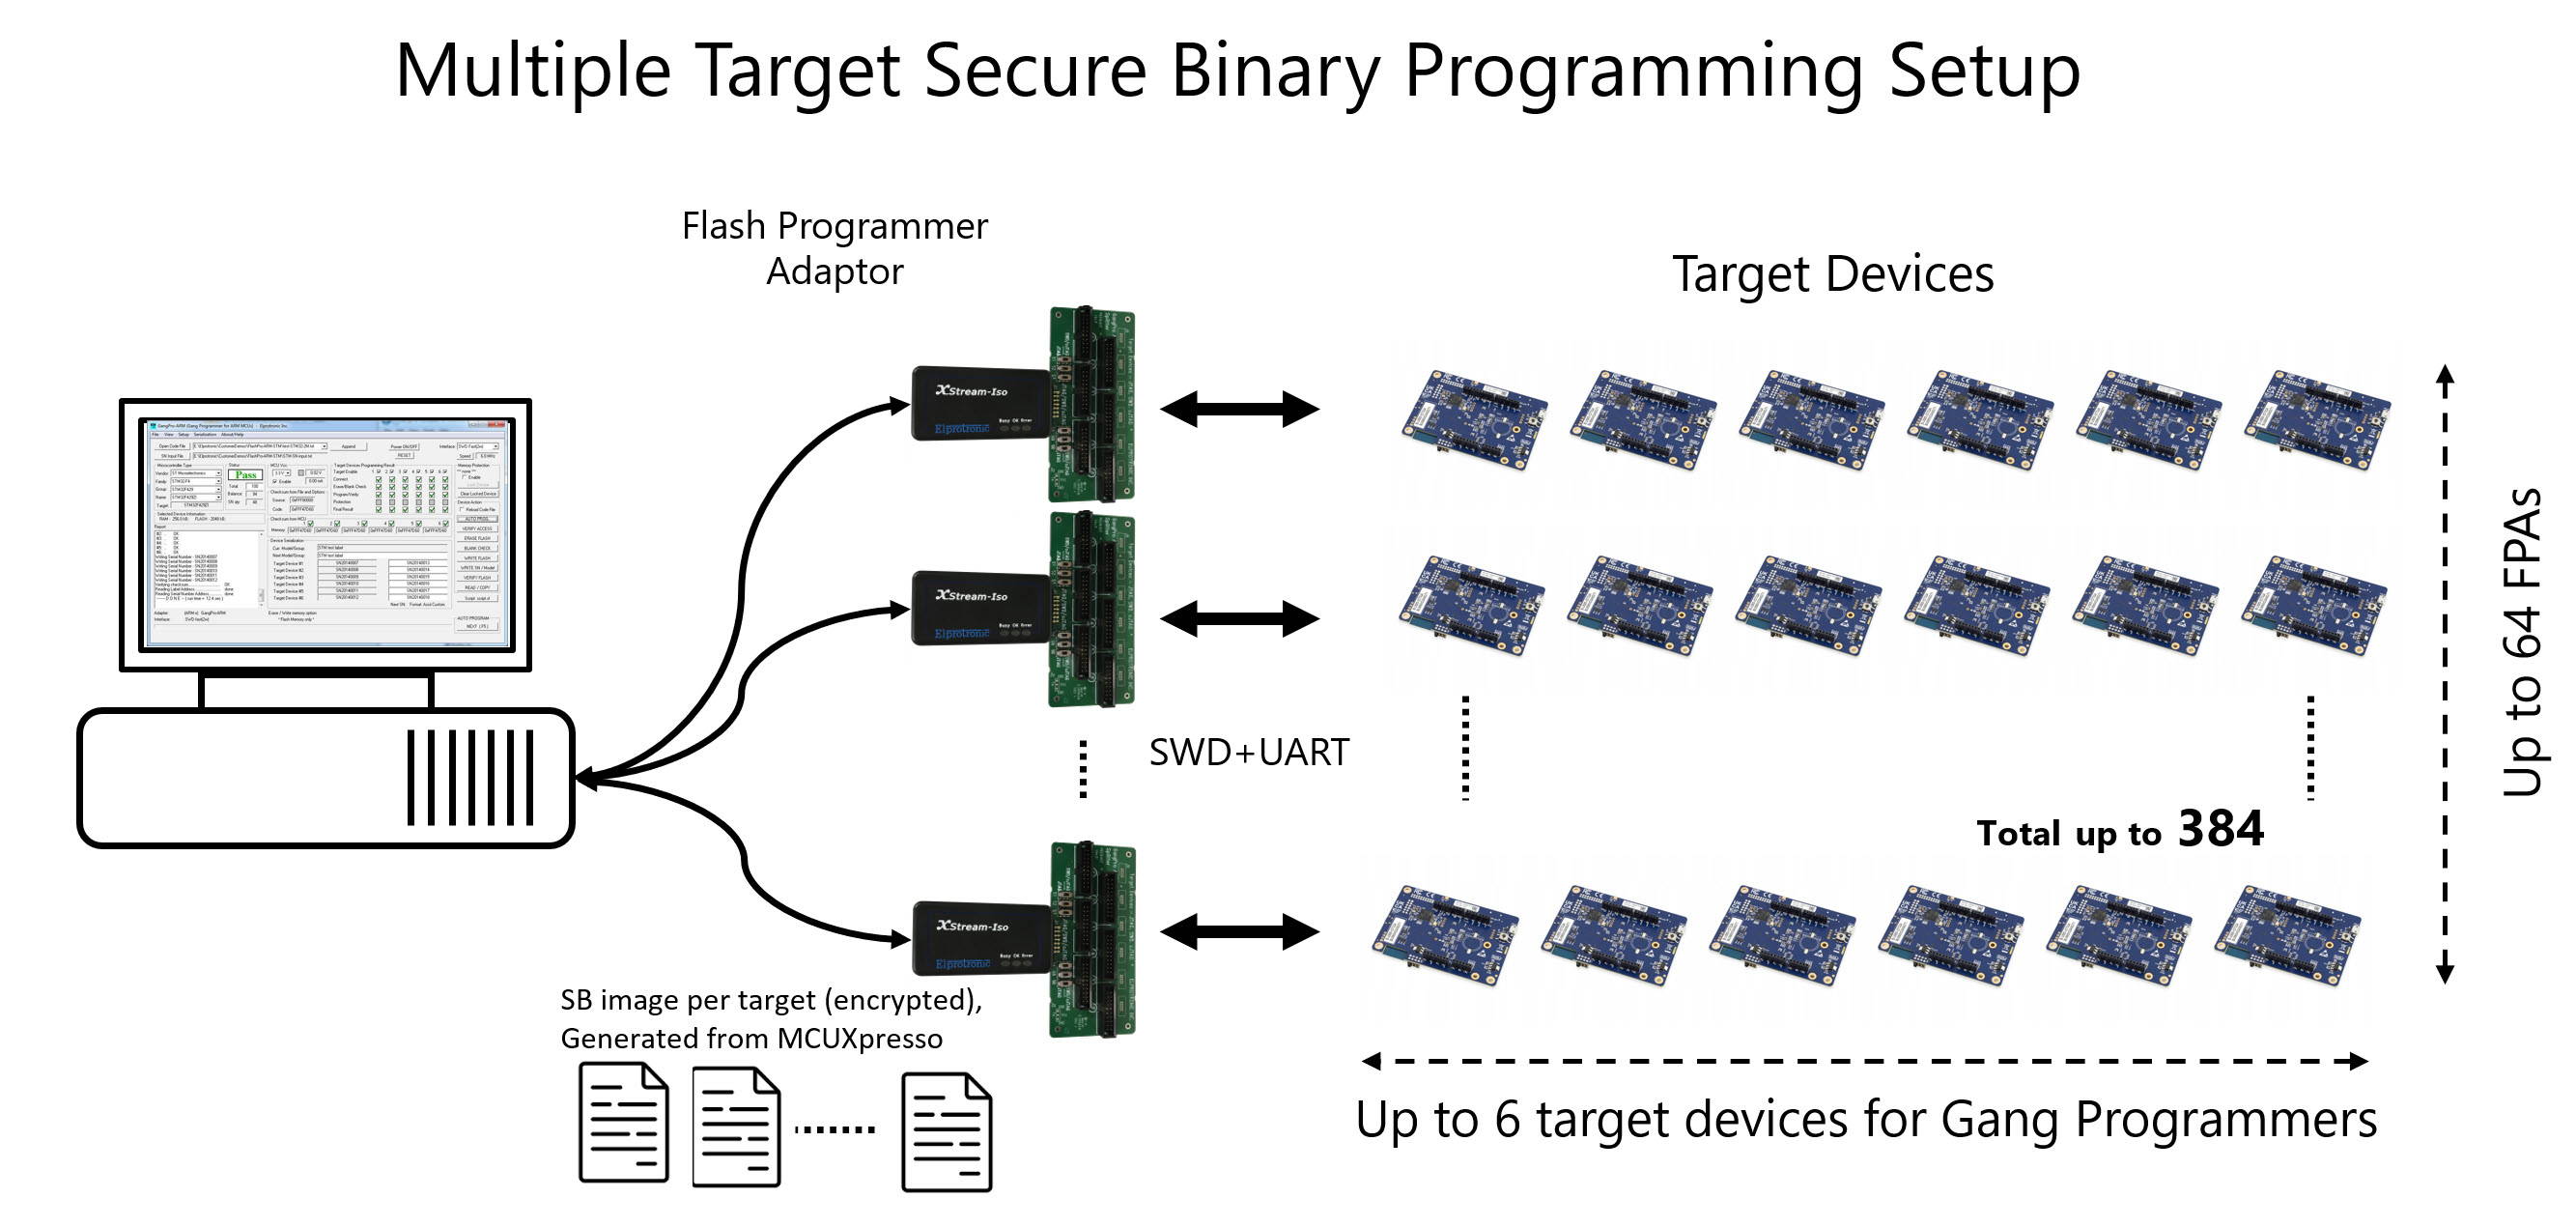 Multiple target secure binary programming setup